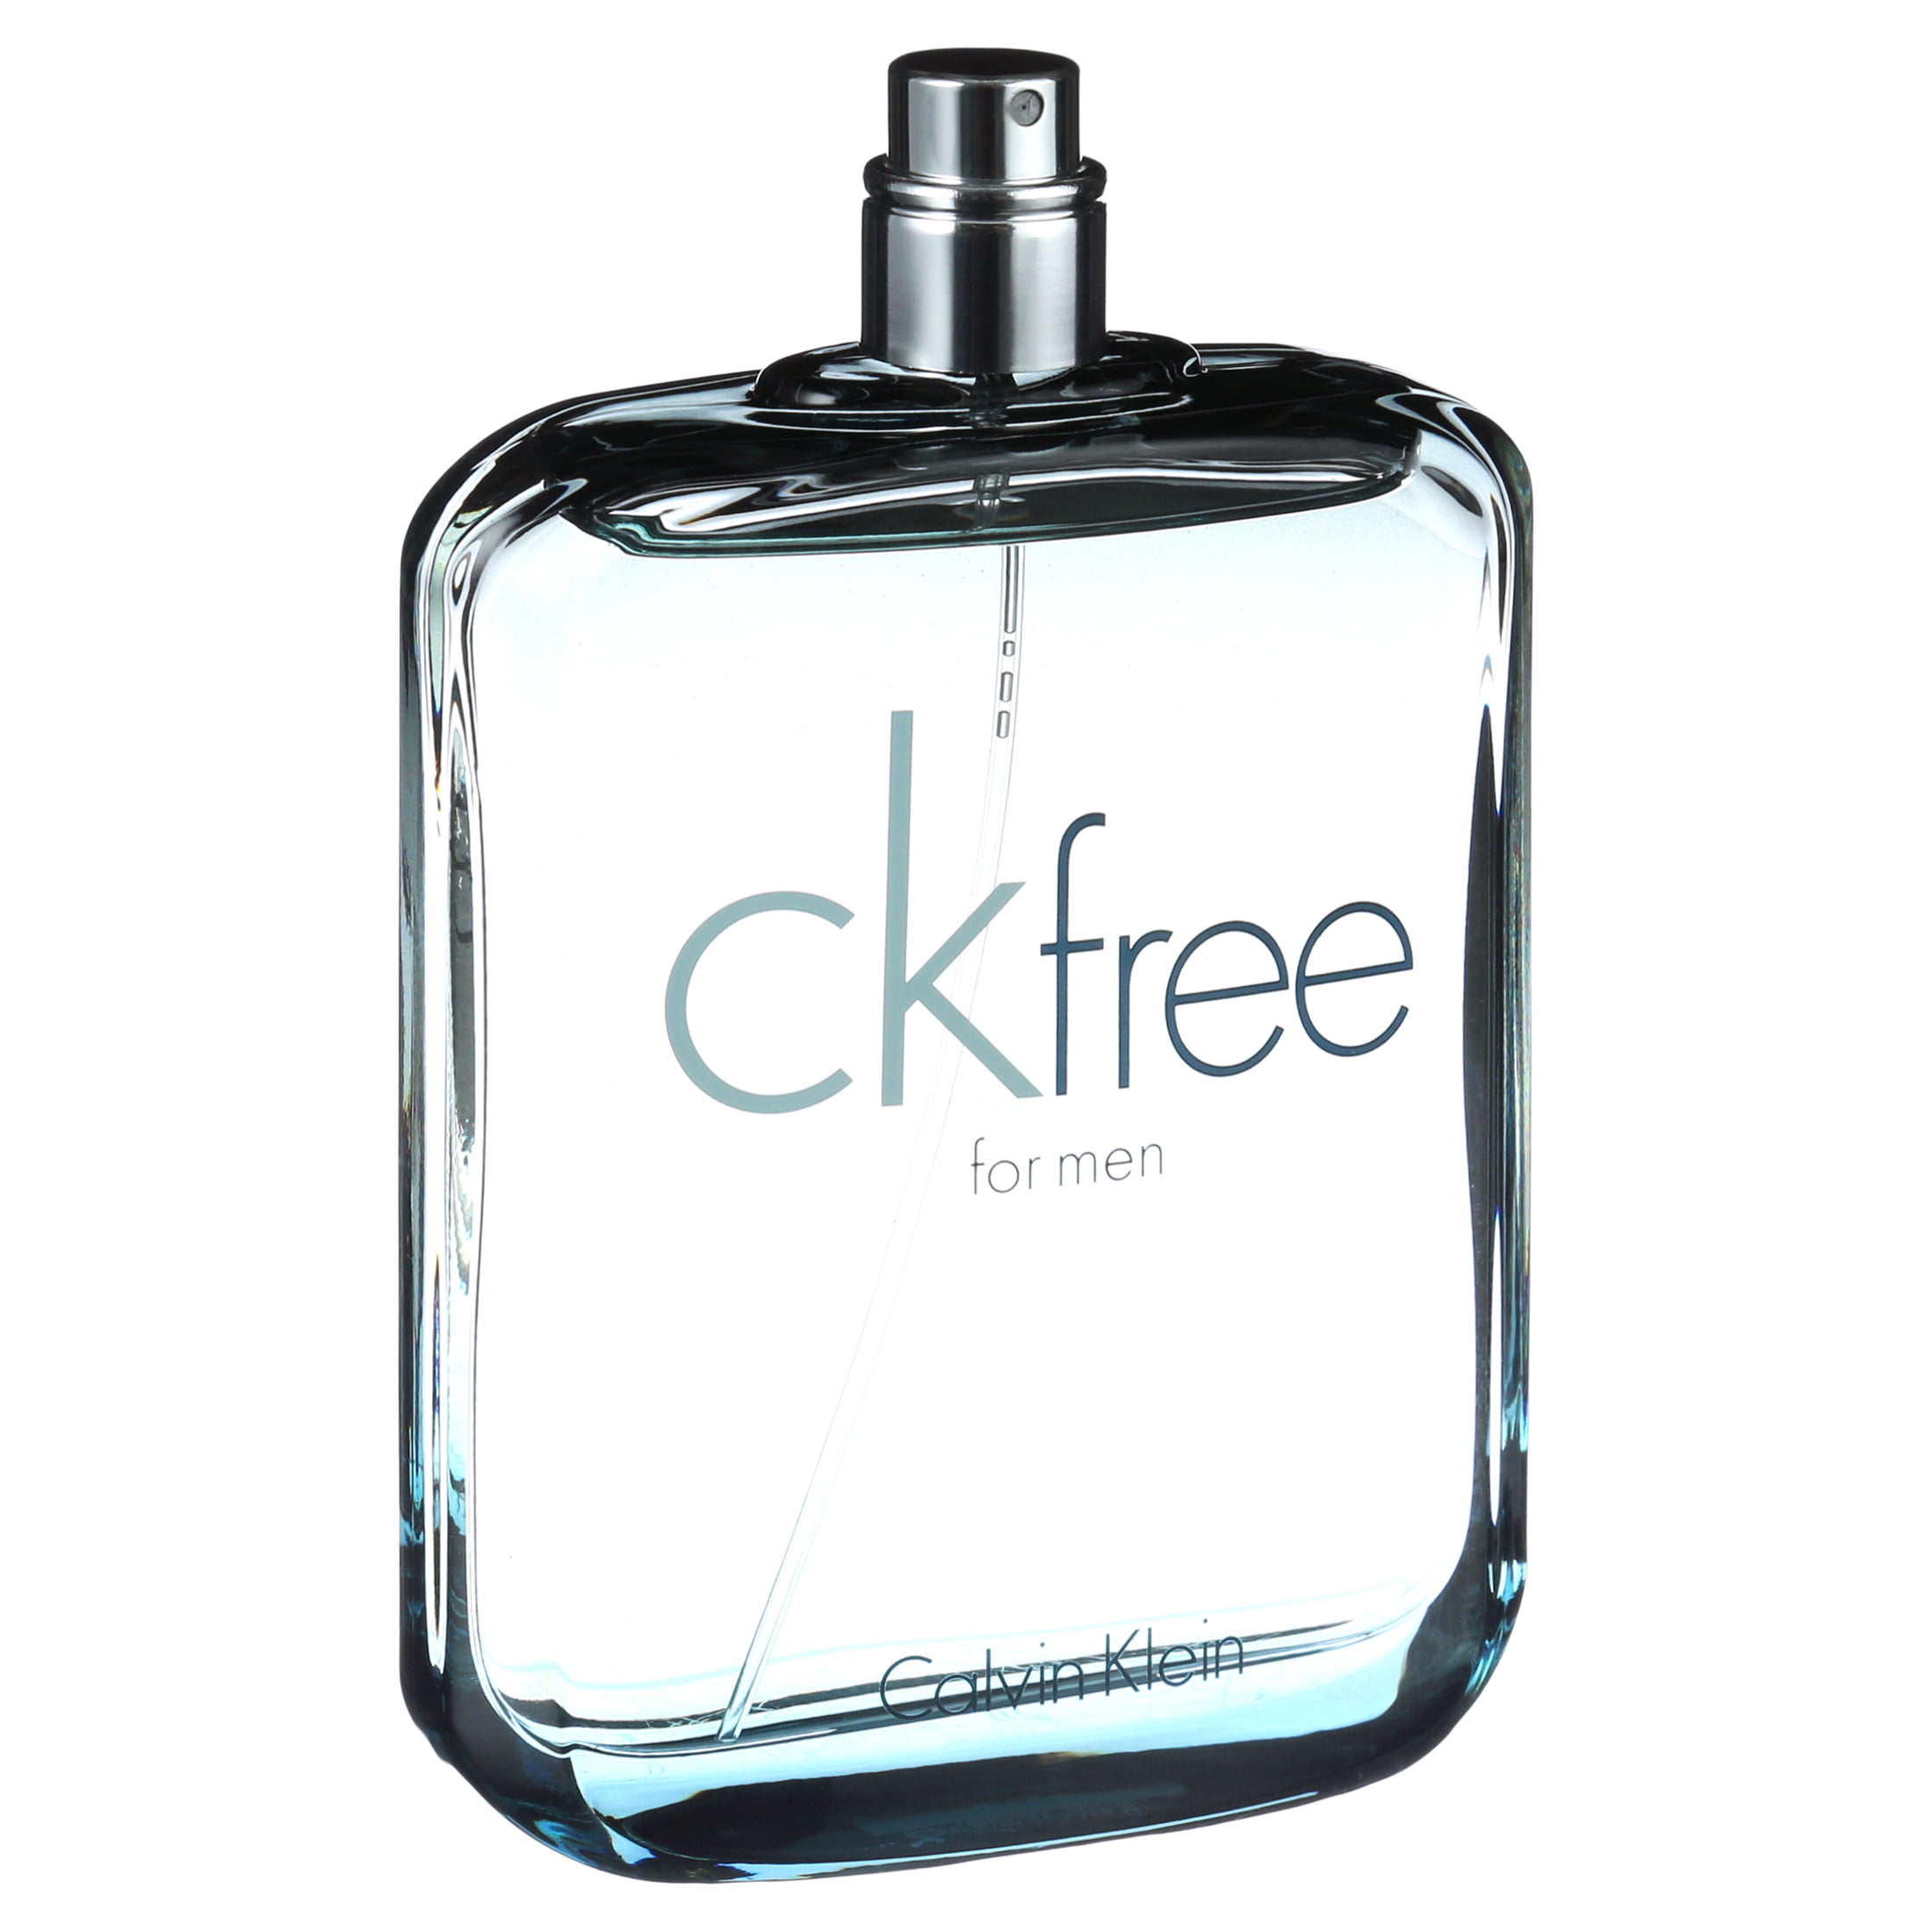 Calvin Klein CK Free Eau De Toilette Spray, Cologne for Men,  Oz -  